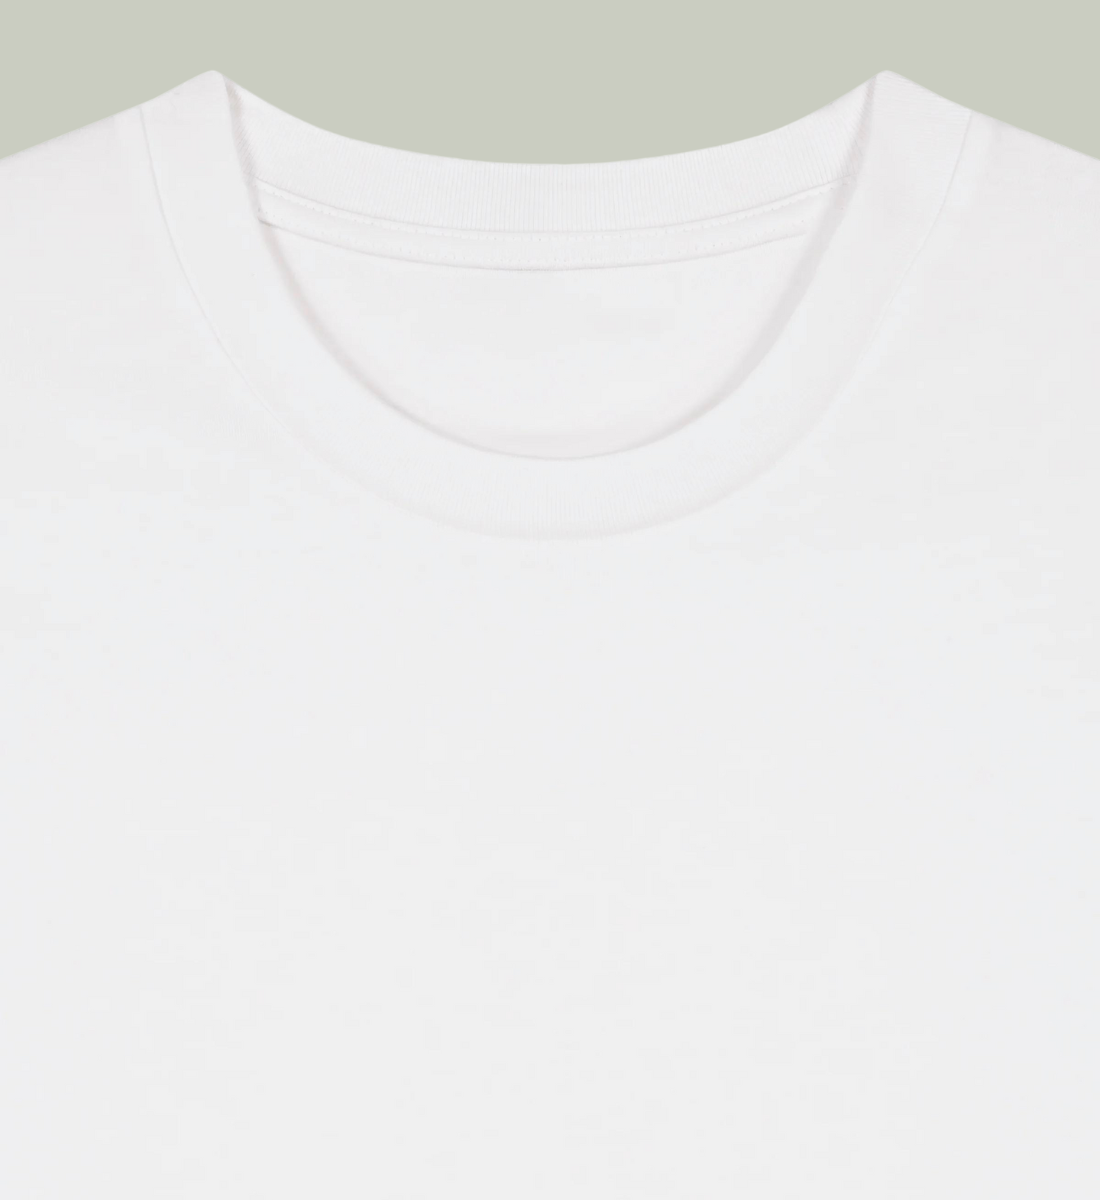 Your Life - Bio T-Shirt Unisex